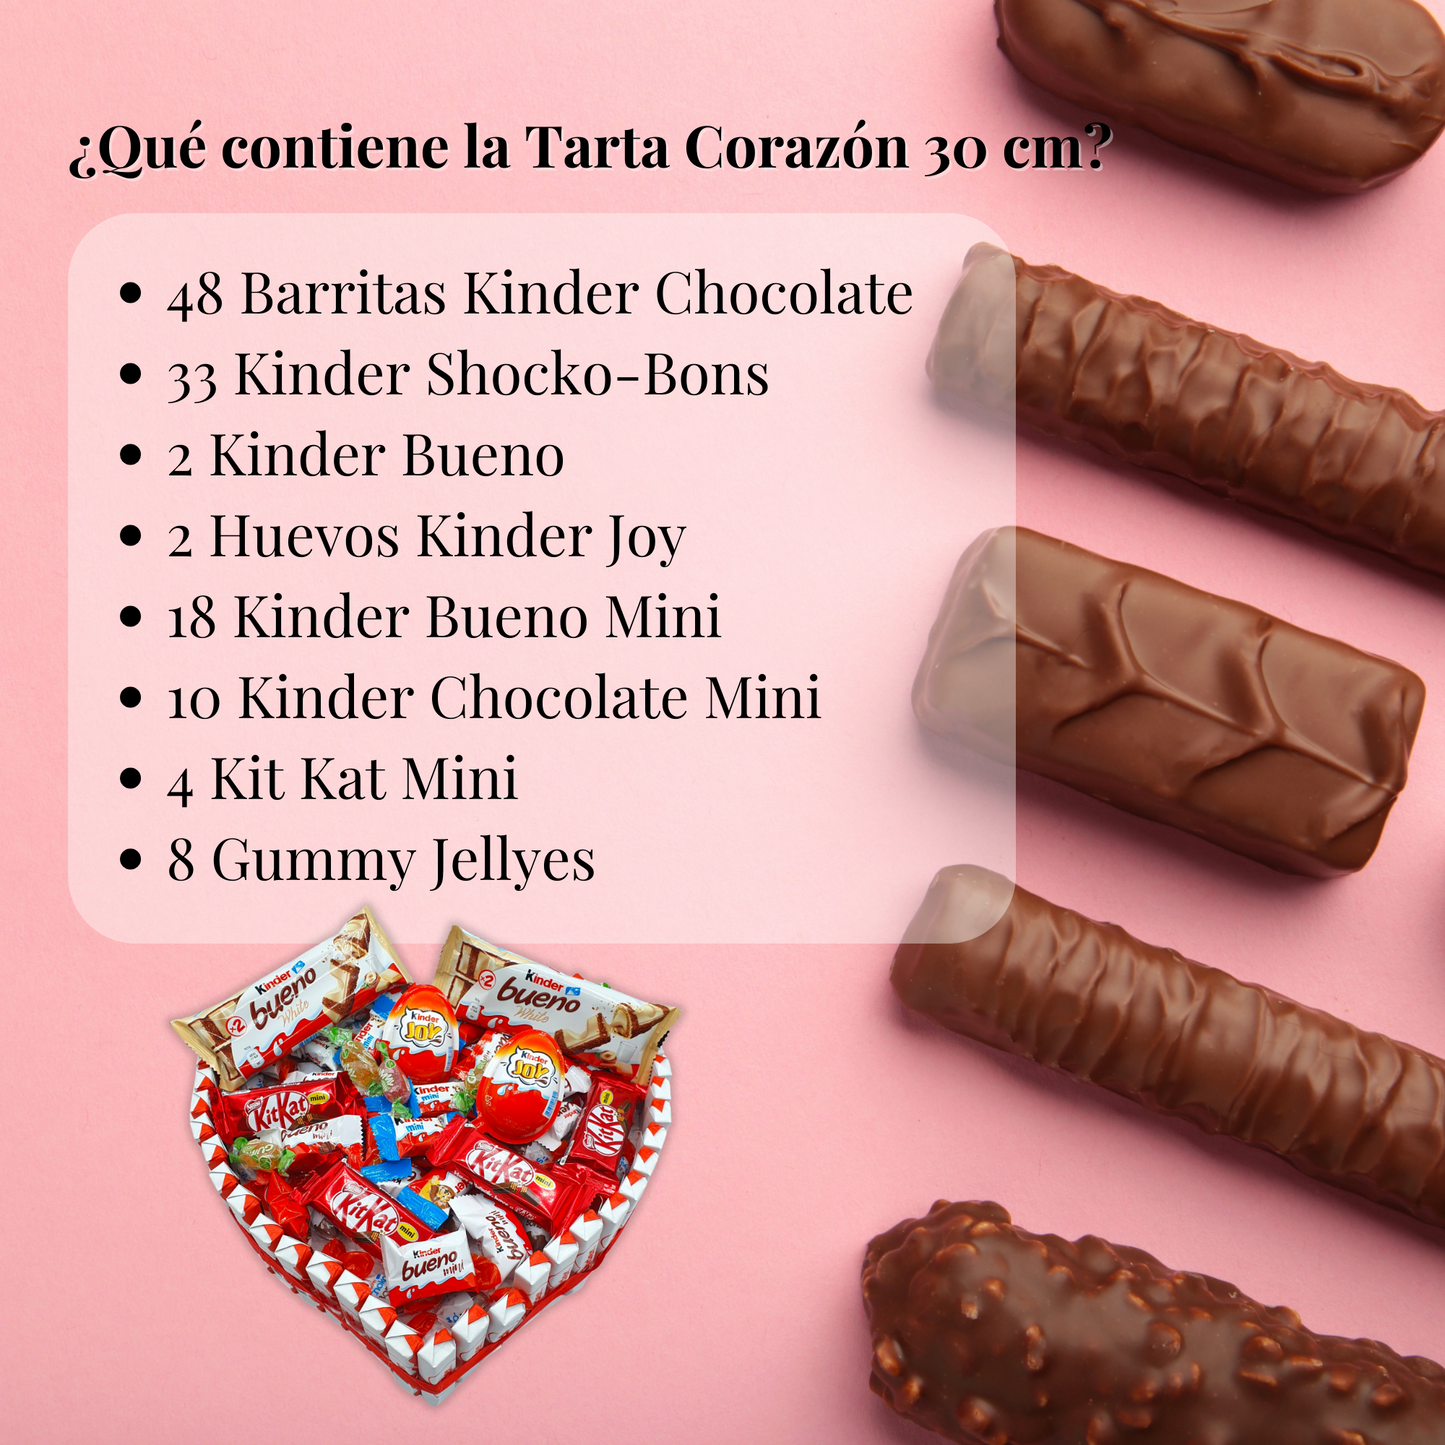 Corazon de Chocolate Kinder + 125 Chocolates - Corazon de Chocolate de 30 cms.